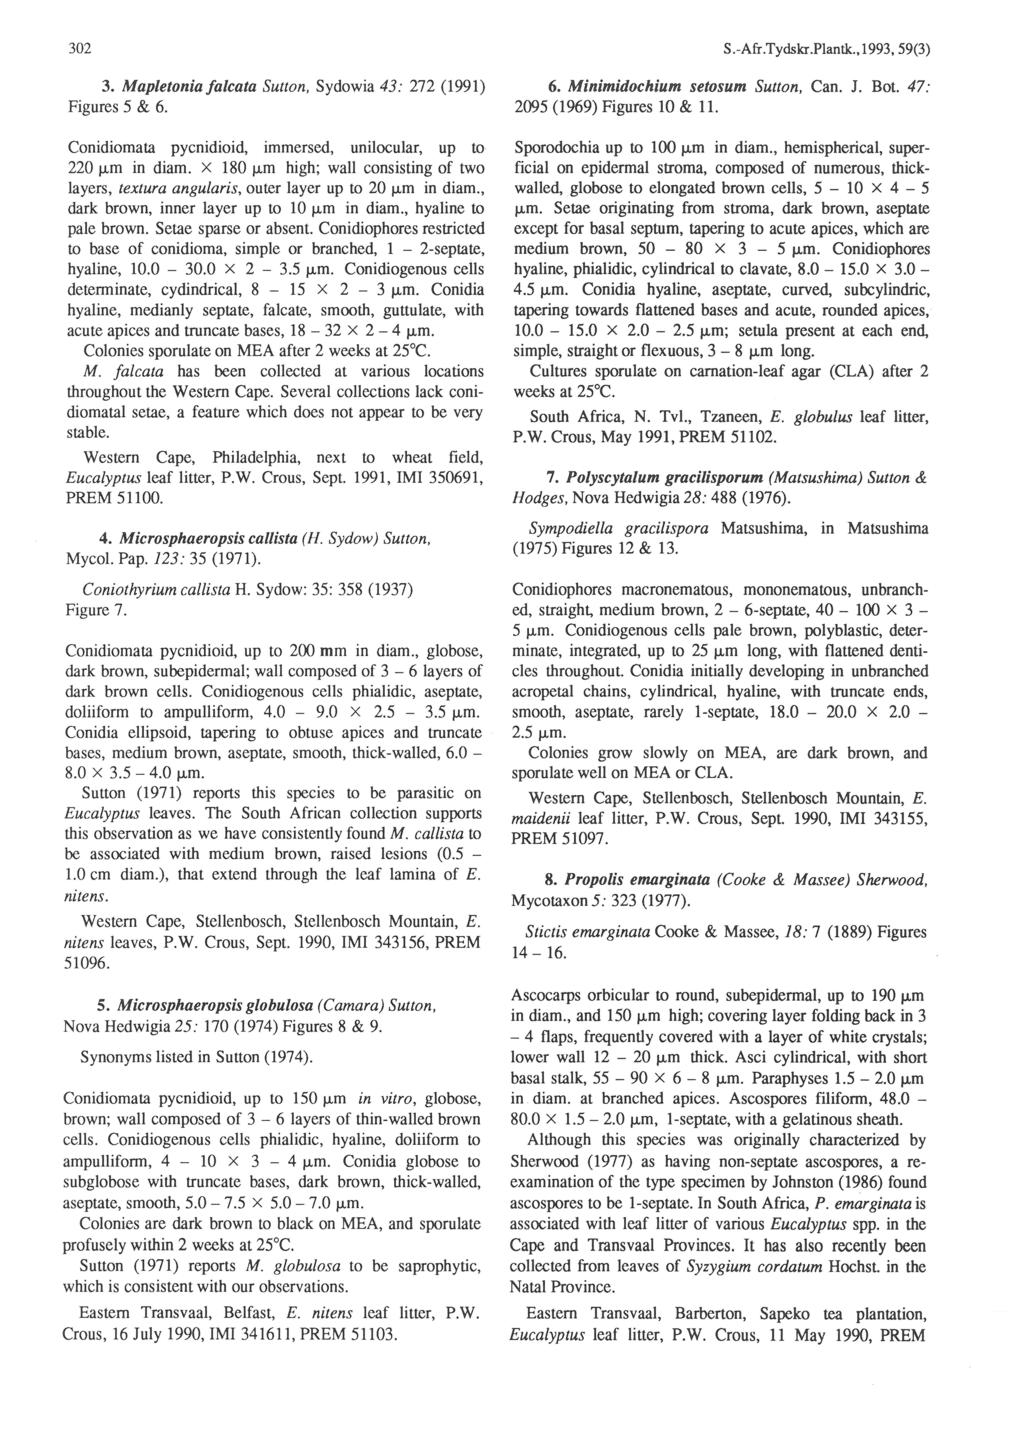 302 S.-Afr.Tydskr.Plantk., 1993,59(3) 3. MapletoniaJalcata Sutton, Sydowia 43: 272 (1991) Figures 5 & 6. 6. Minimidochium setosum Sutton, Can. J. Bot. 47: 2095 (1969) Figures 10 & 11.